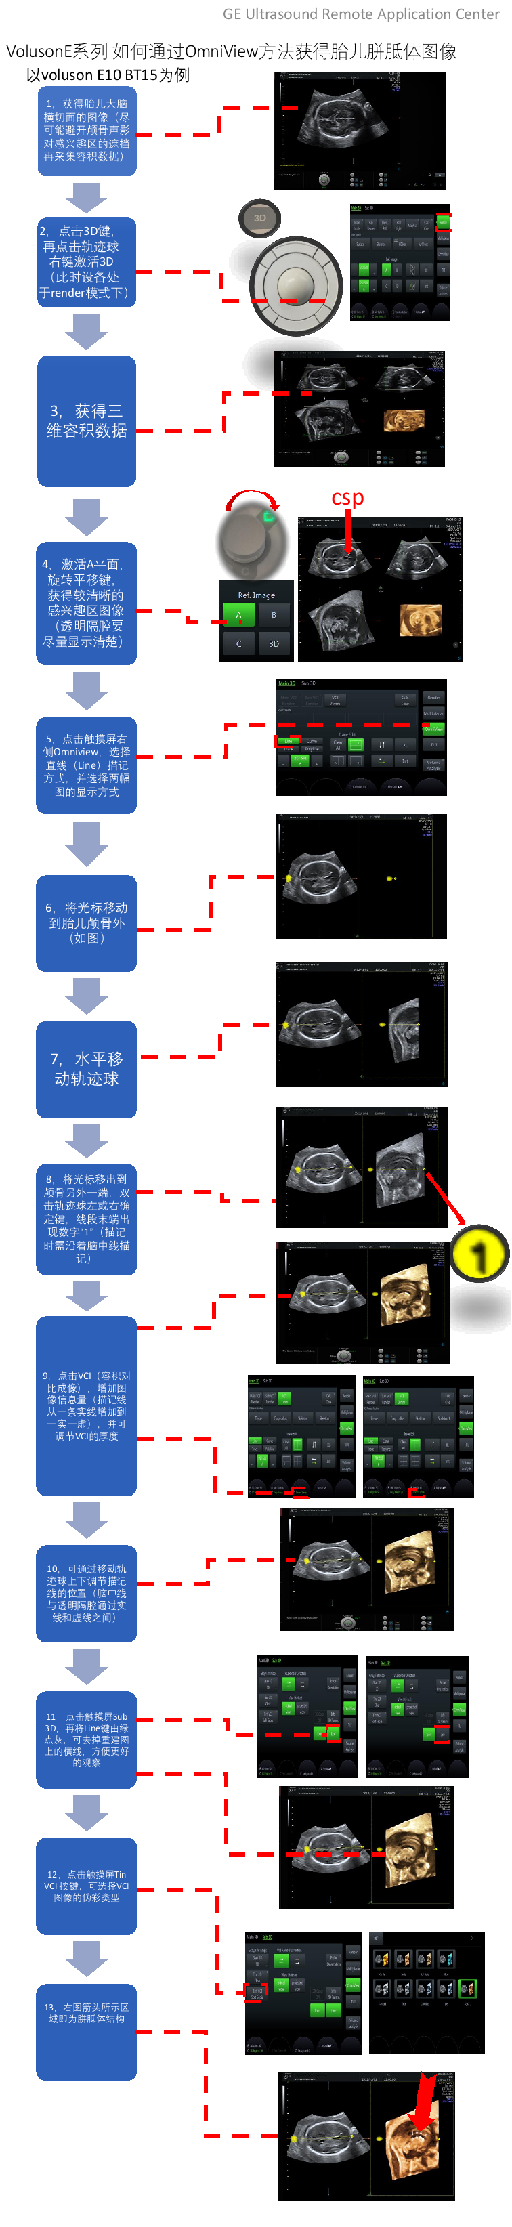 Voluson E系列 如何用omniview获得胎儿胼胝体图像